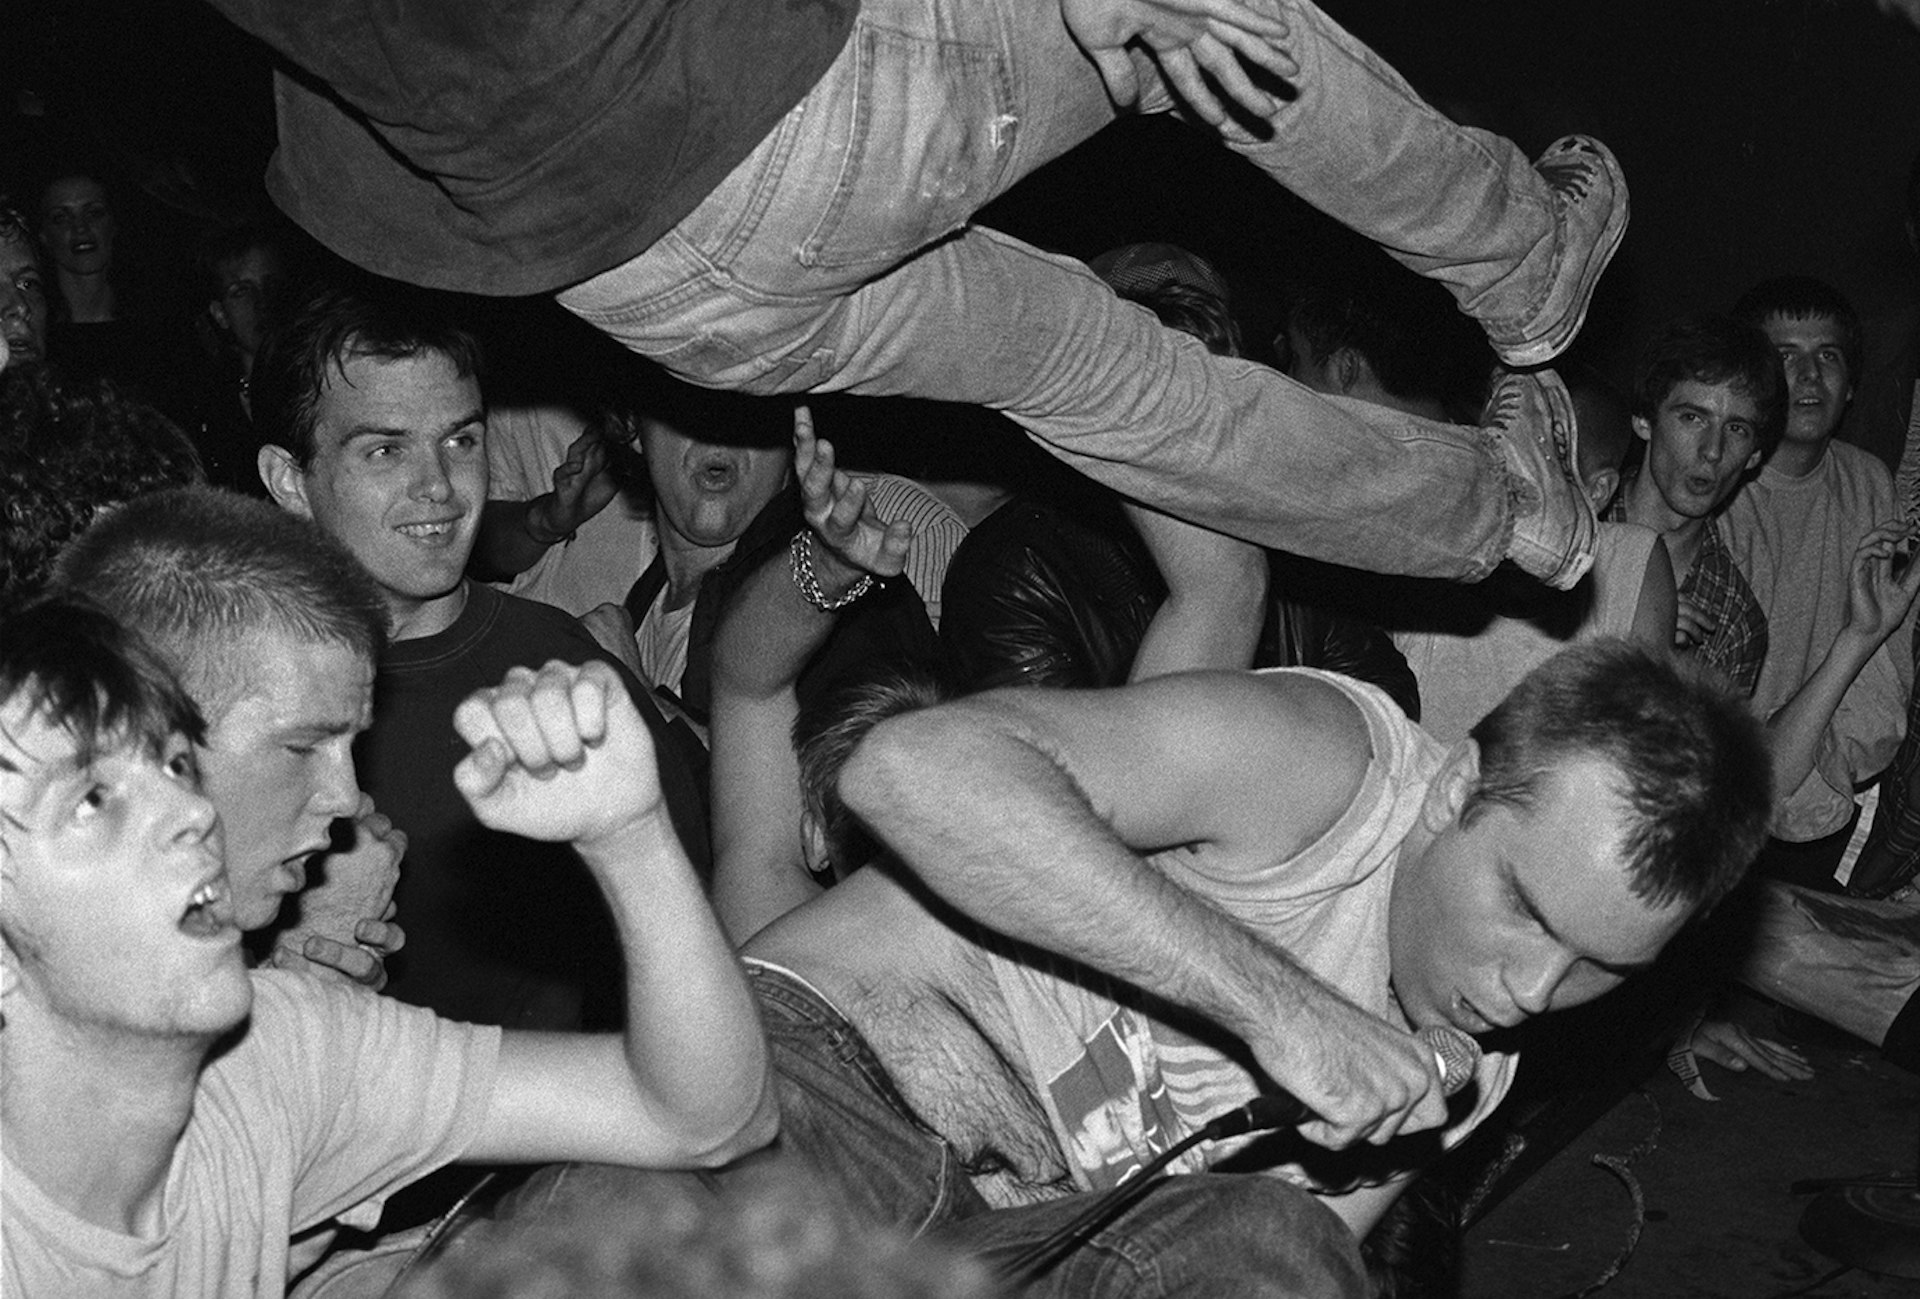 Photos capturing the birth of Washington DC’s punk scene